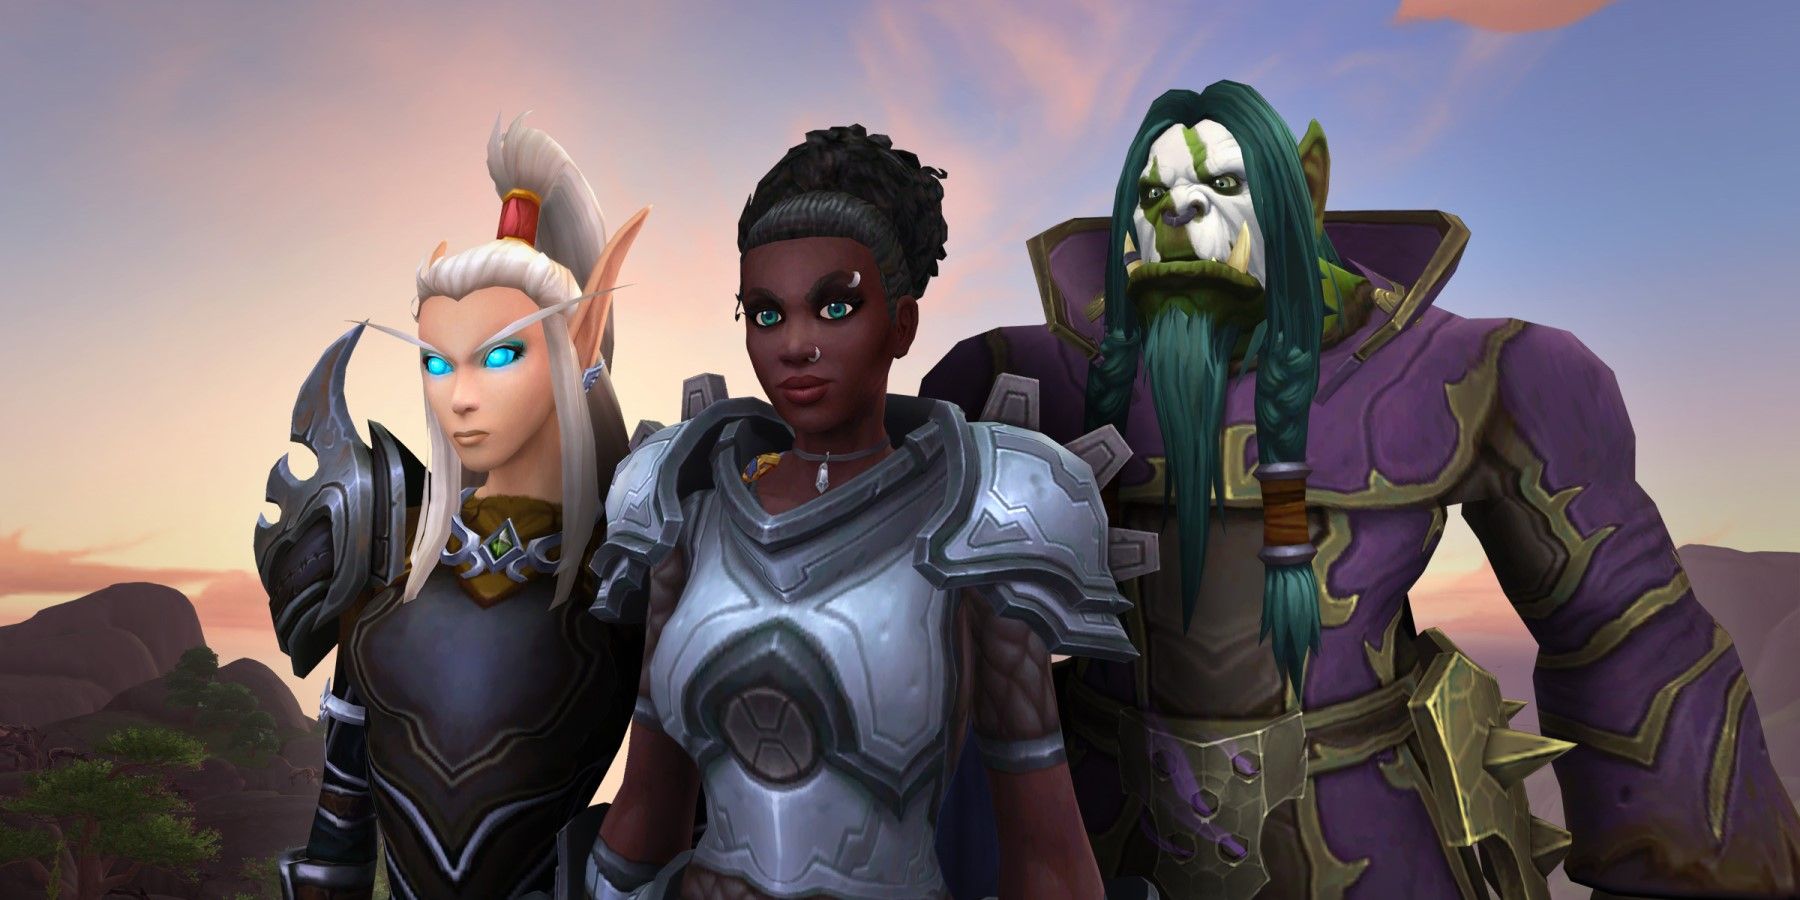 World of Warcraft May be Adding Voice and Pronoun Character Customization Options Soon